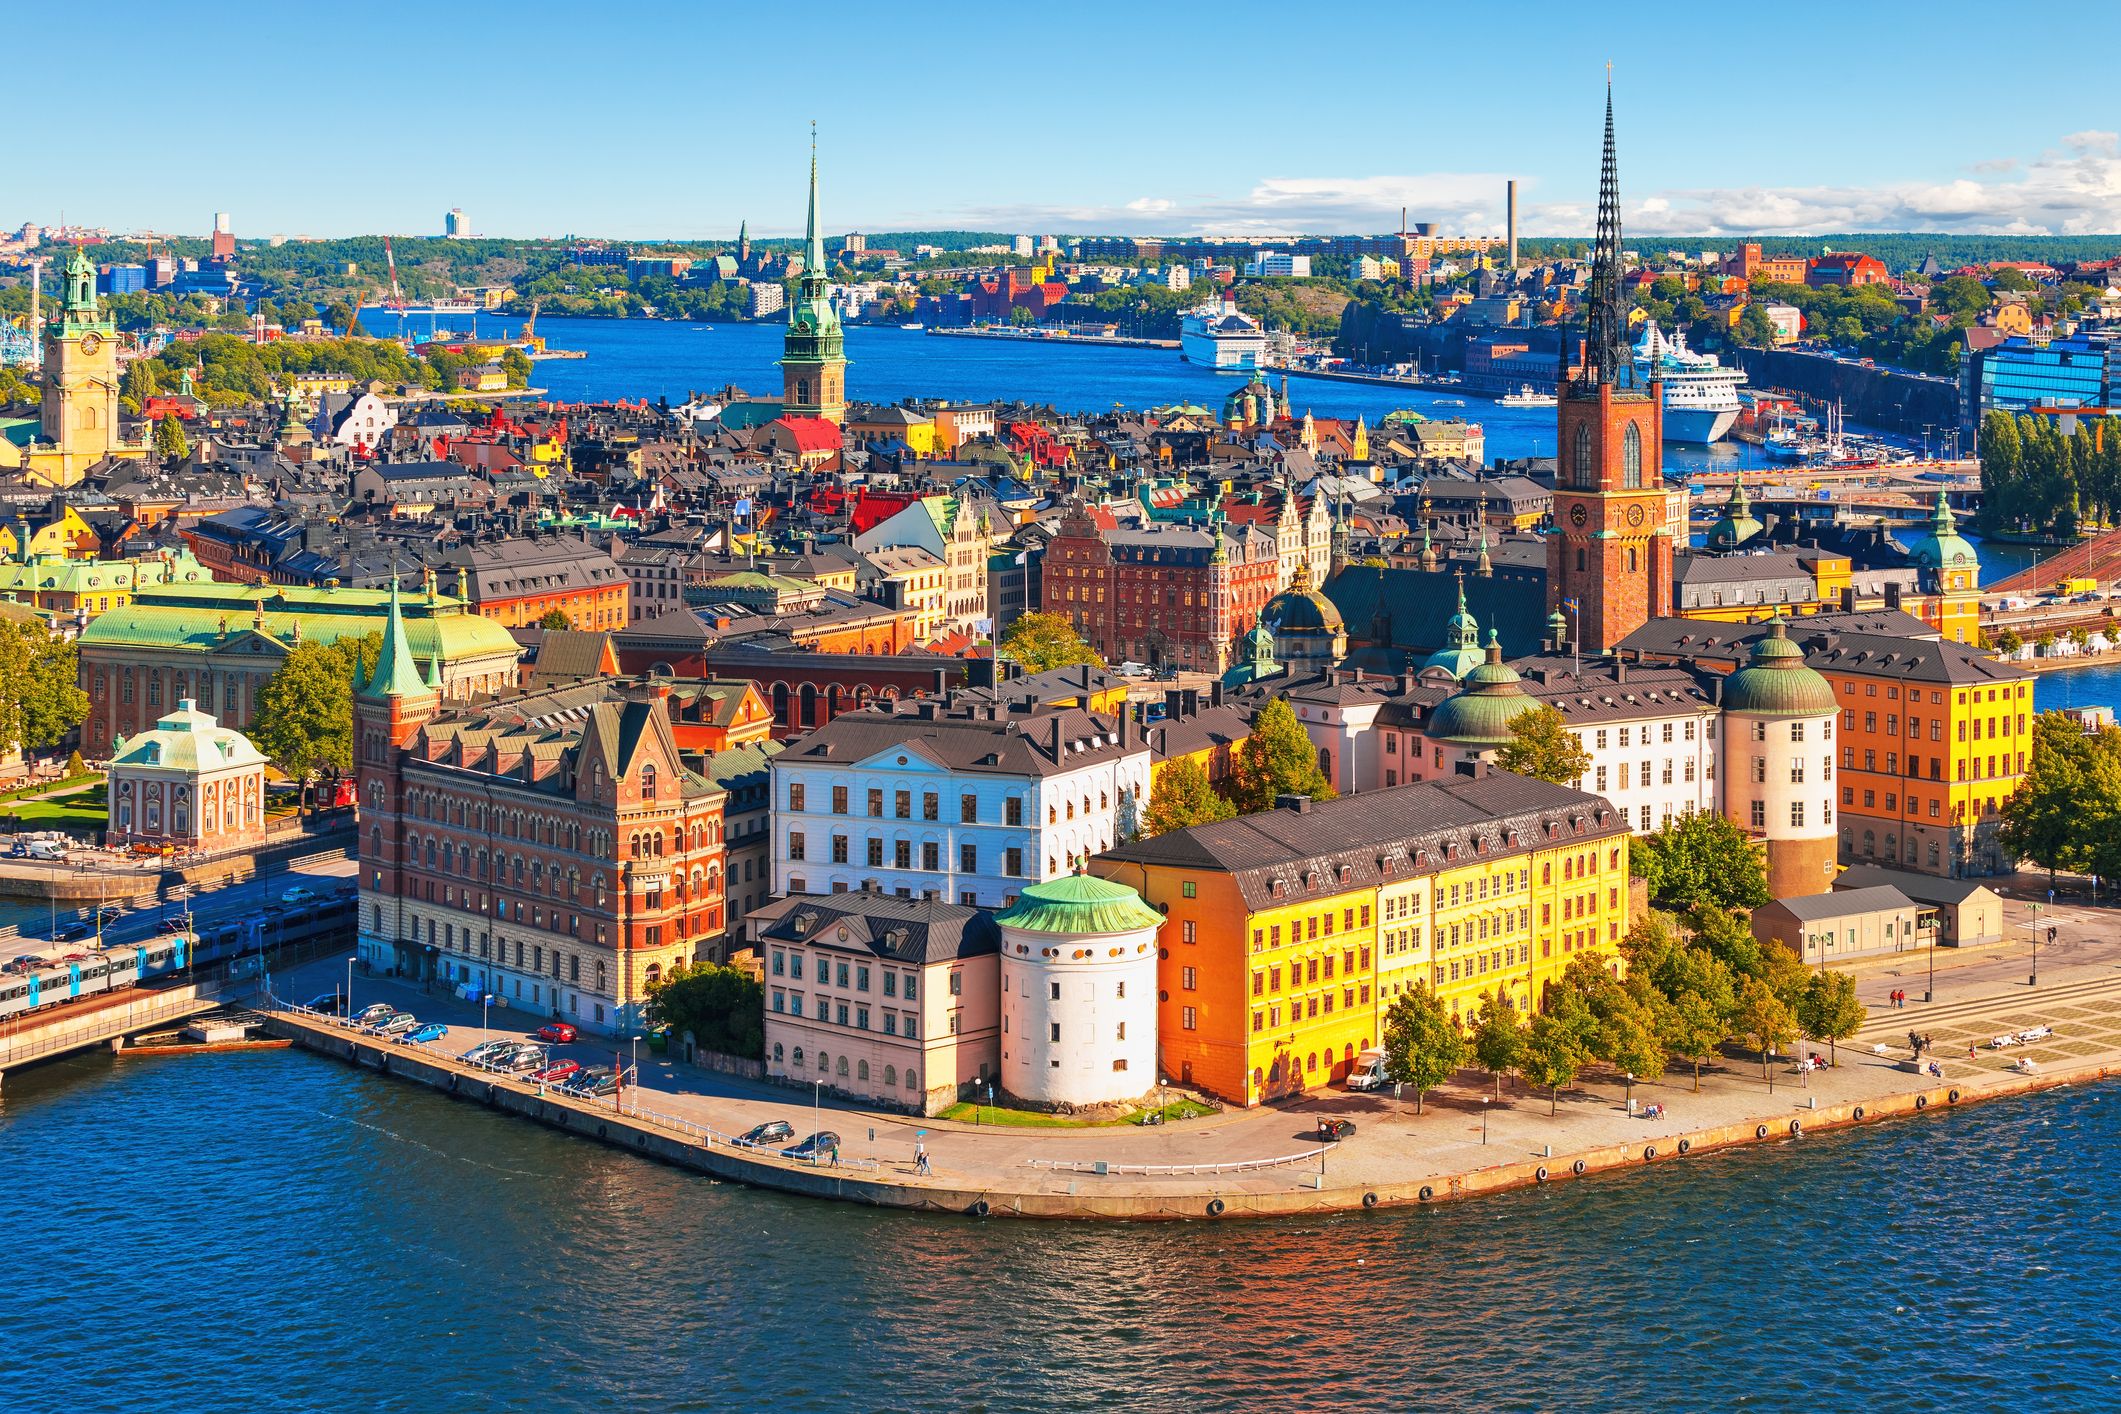 Flights to Sweden in the $300s & $400s round-trip